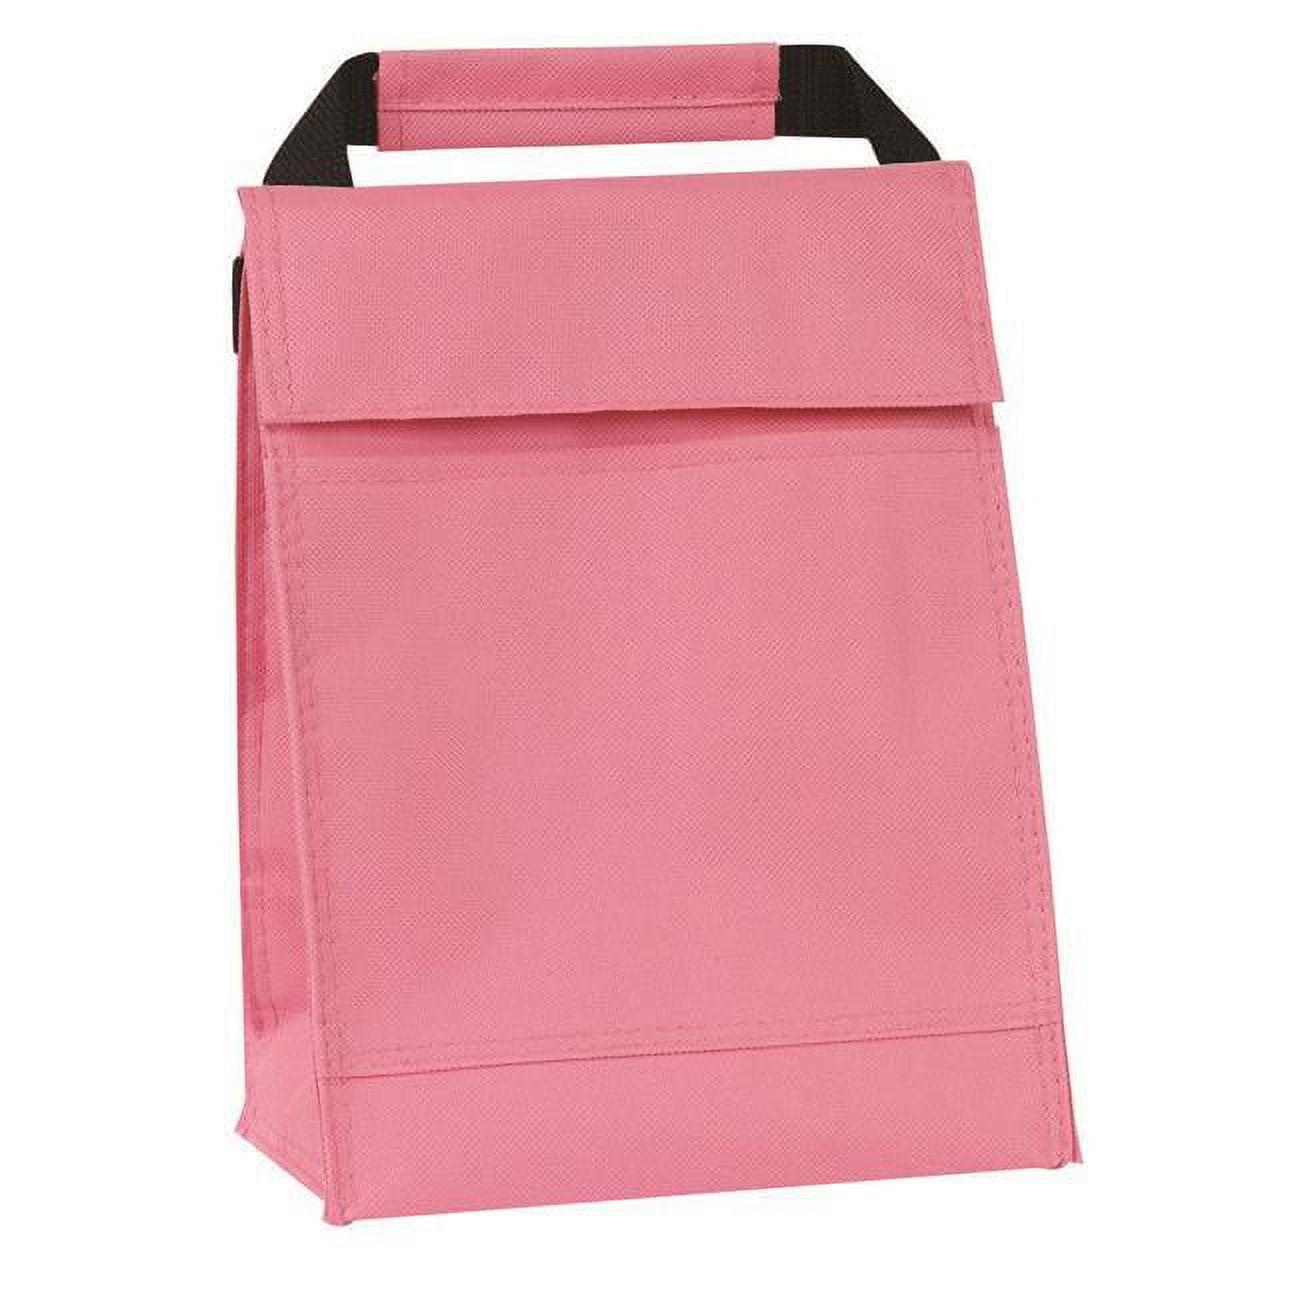 Back To Basics 600 Denier Lunch Pack, Light Pink - Case Of 100